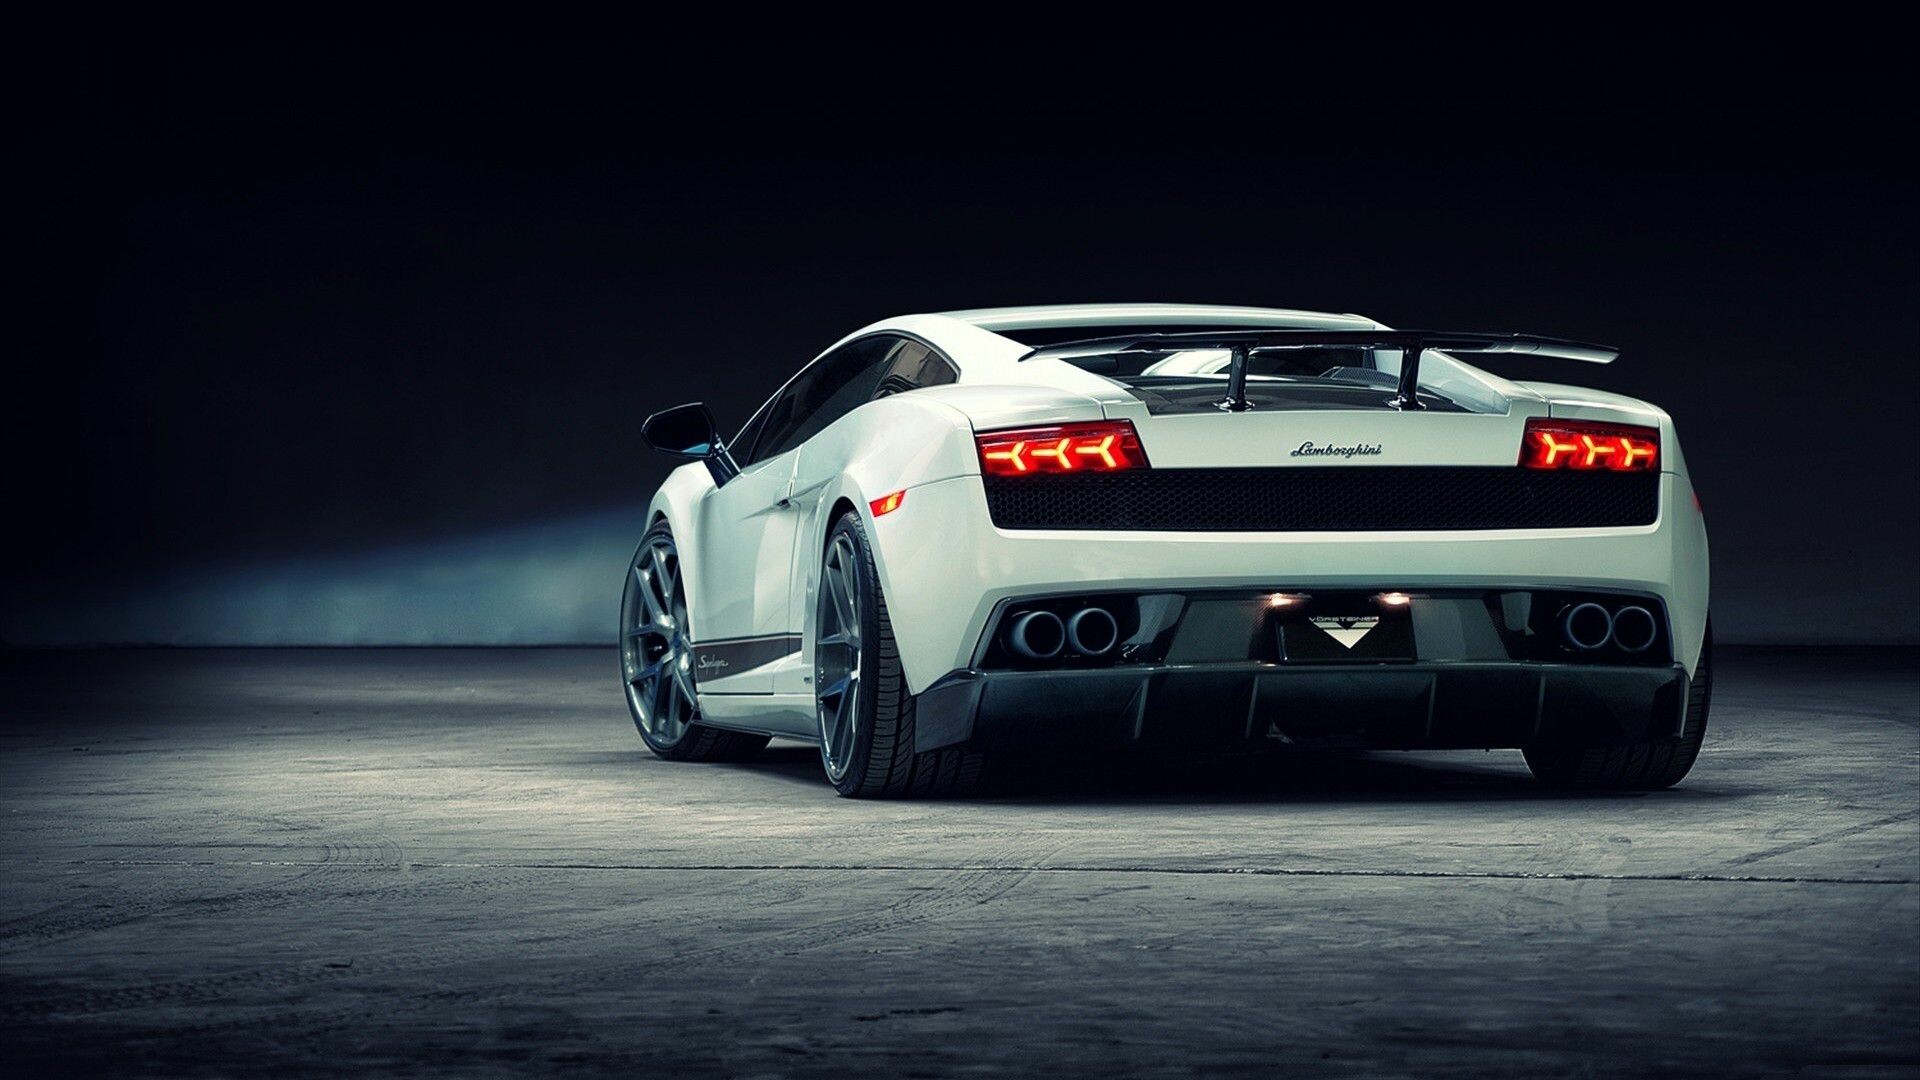 Lamborghini: The Diablo's final evolution, the GT, was introduced in 1999, Gallardo. 1920x1080 Full HD Wallpaper.